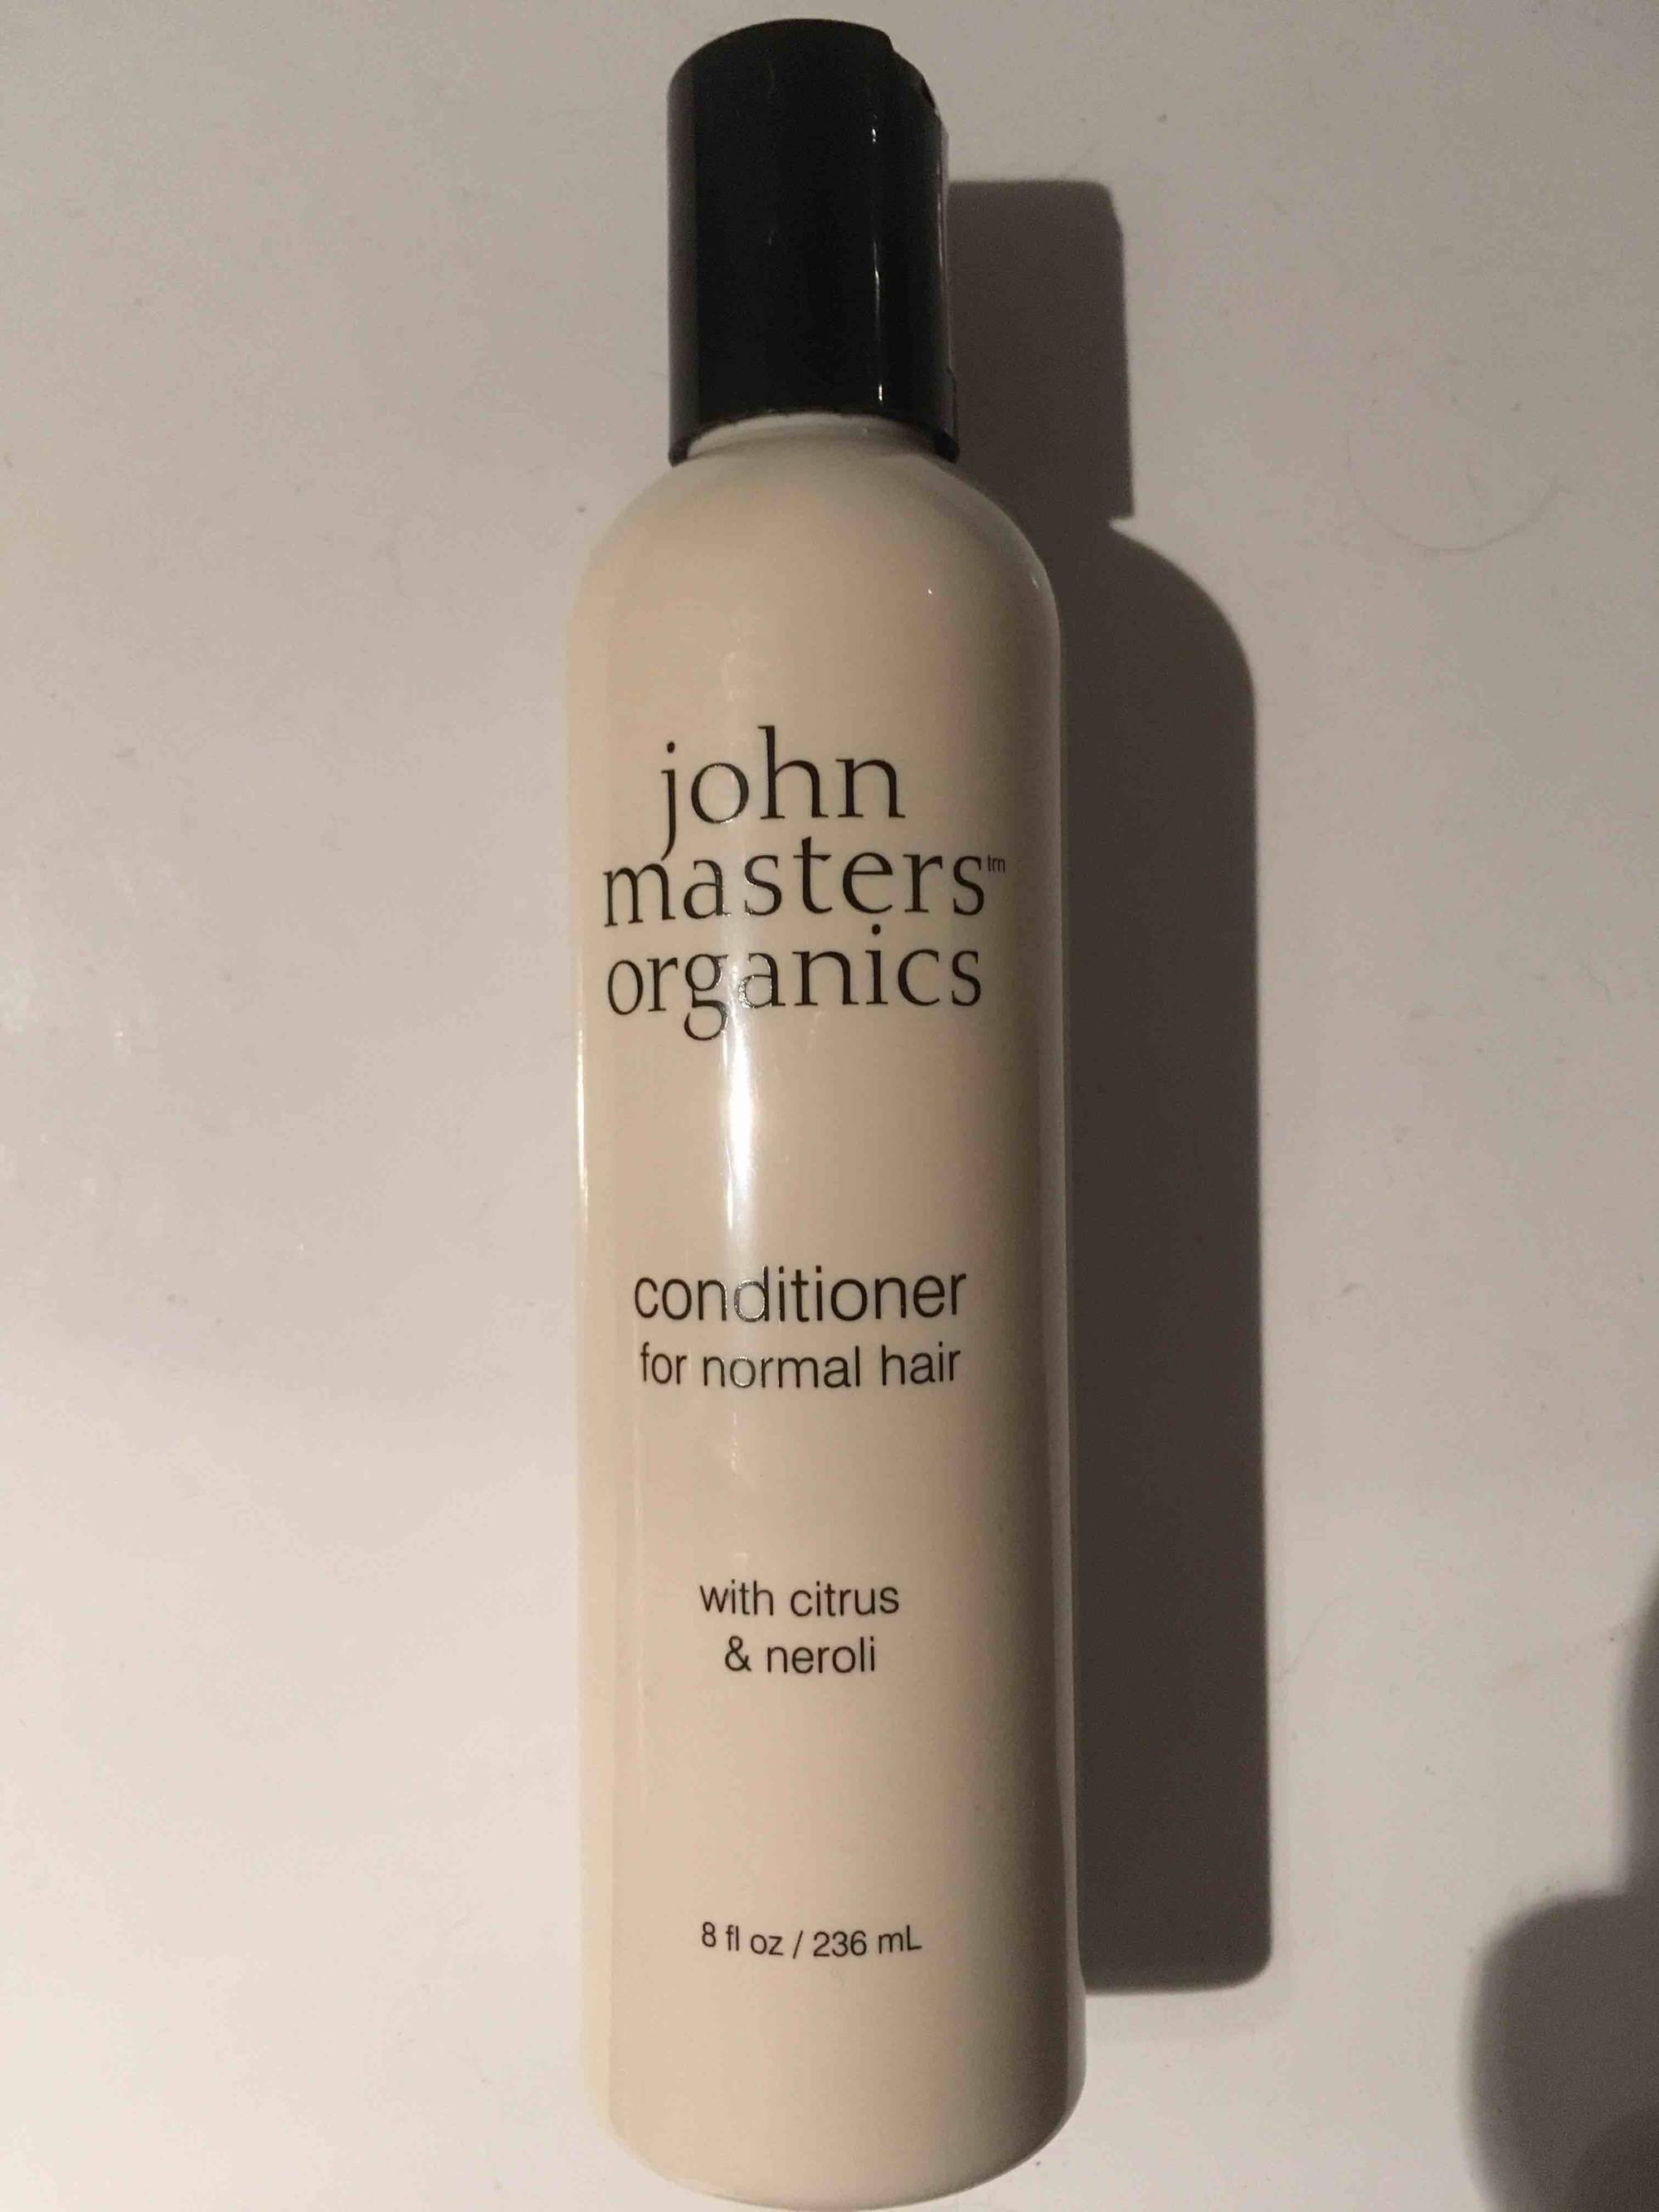 JOHN MASTERS ORGANICS - Conditioner for normal hair